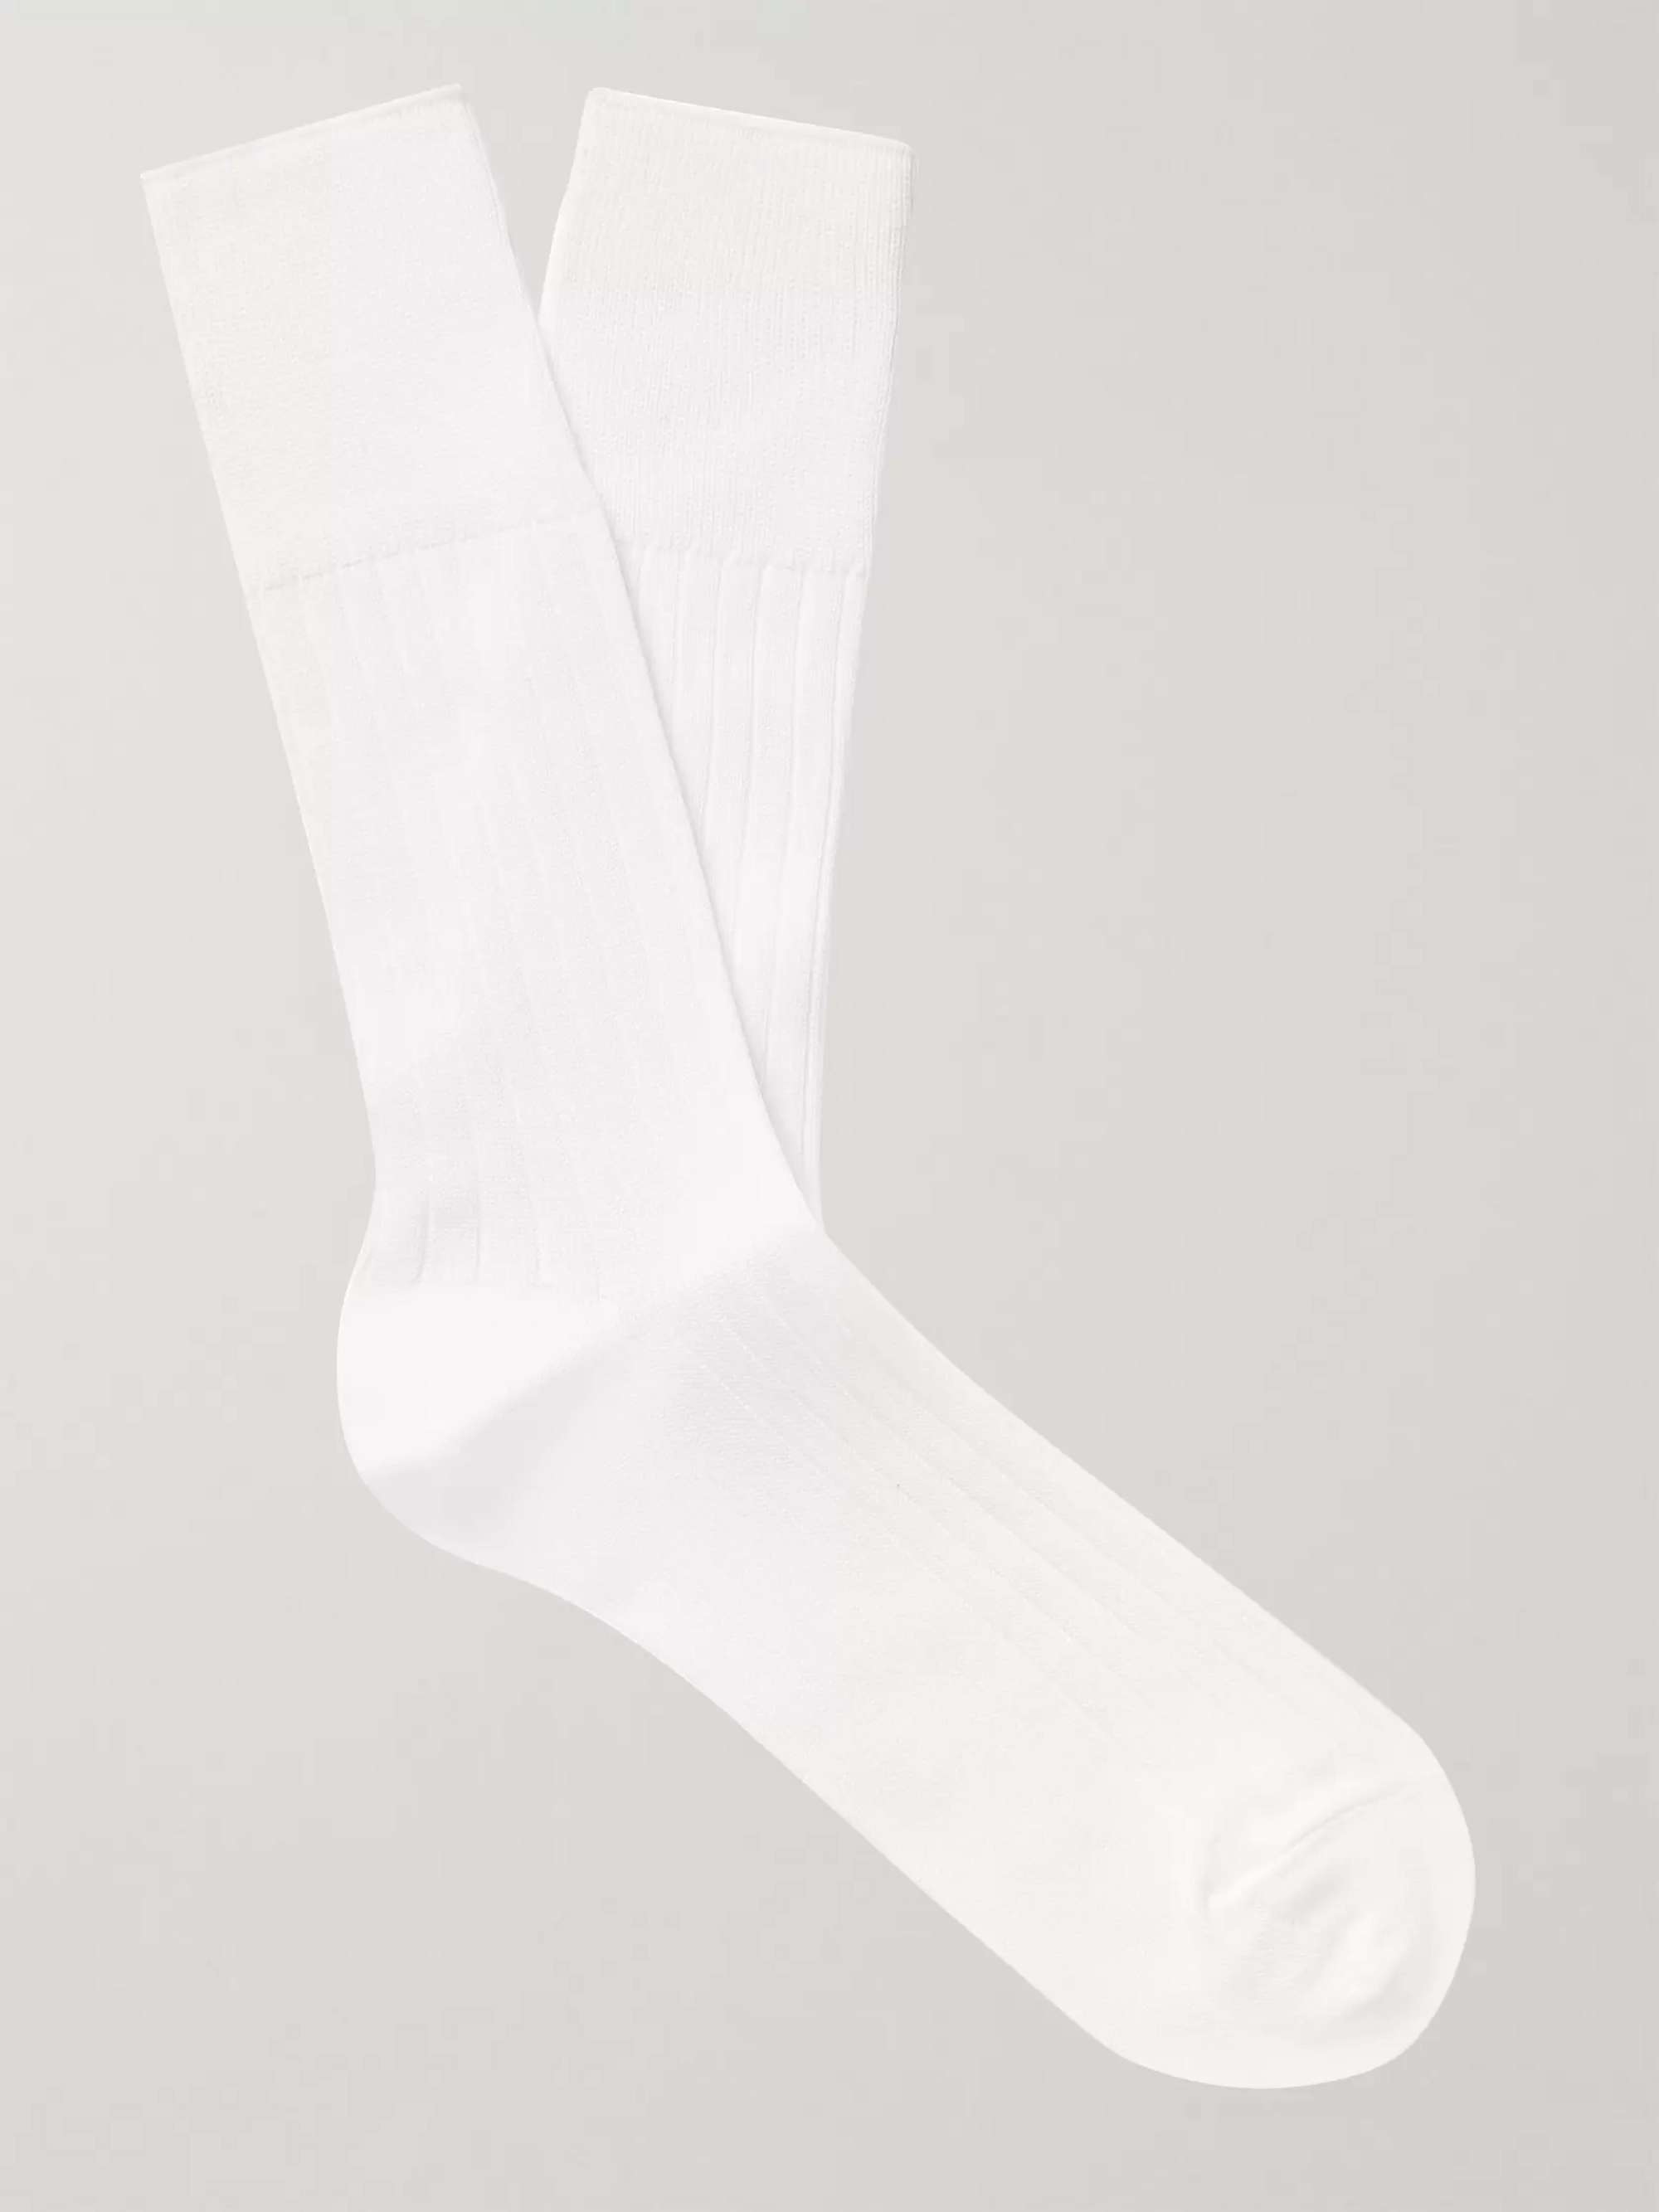 MR P. Cotton-Blend Socks